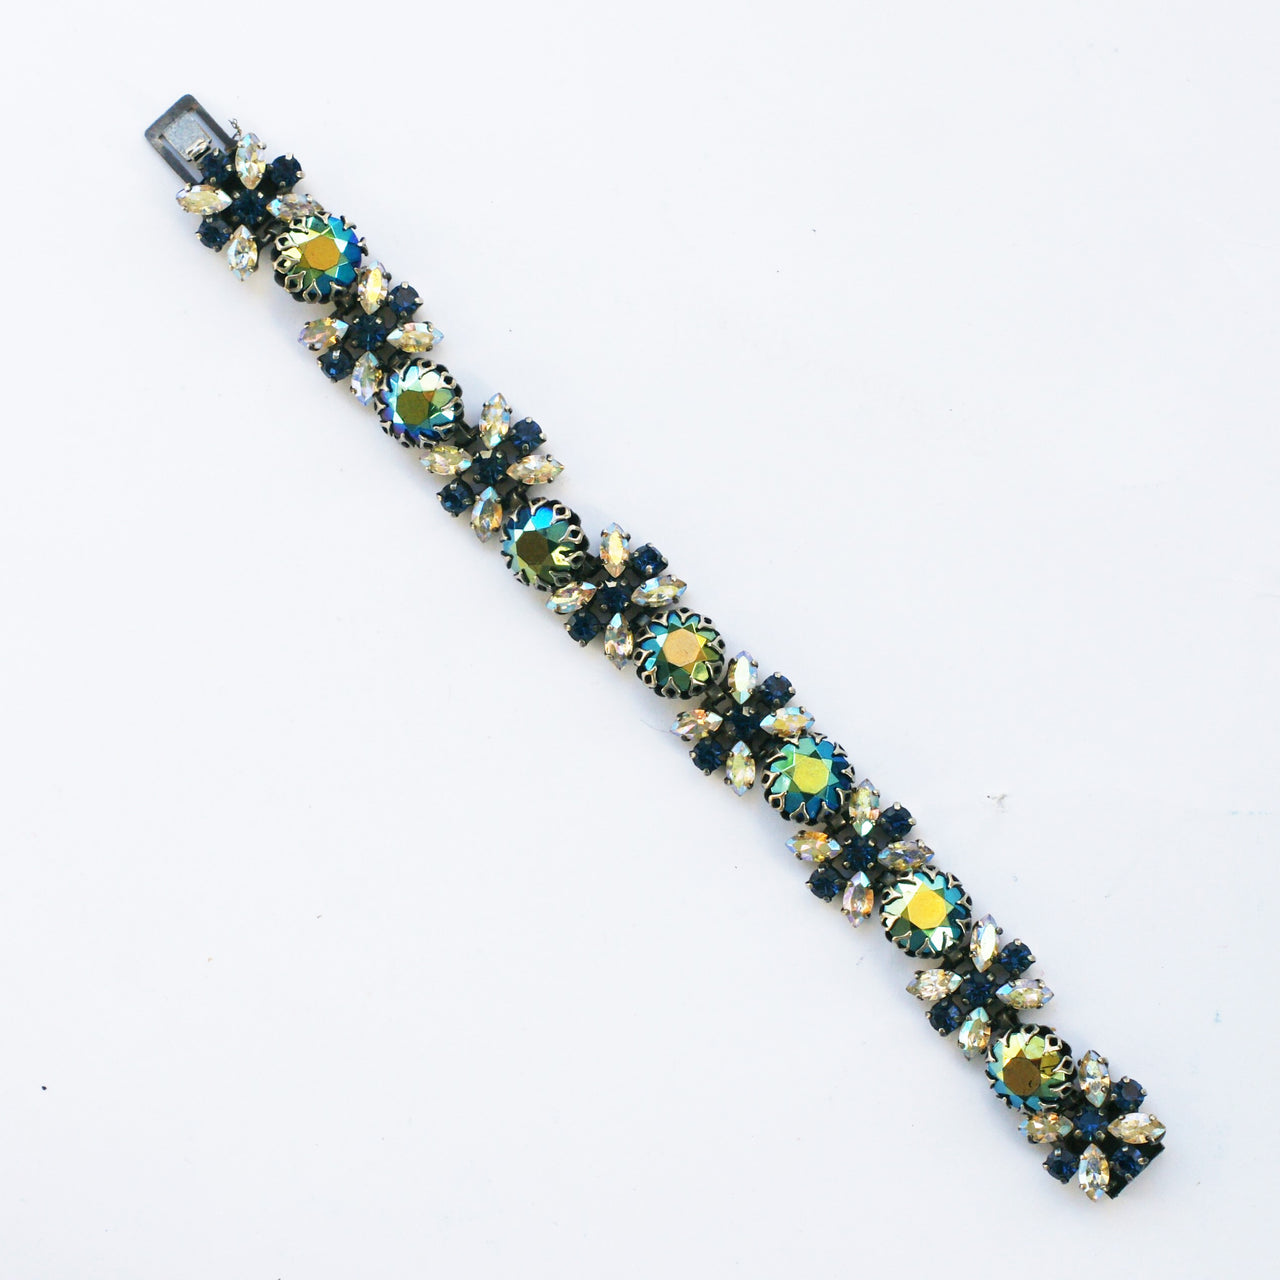 1950s vintage jewelcraft rhinestones bracelet in blue